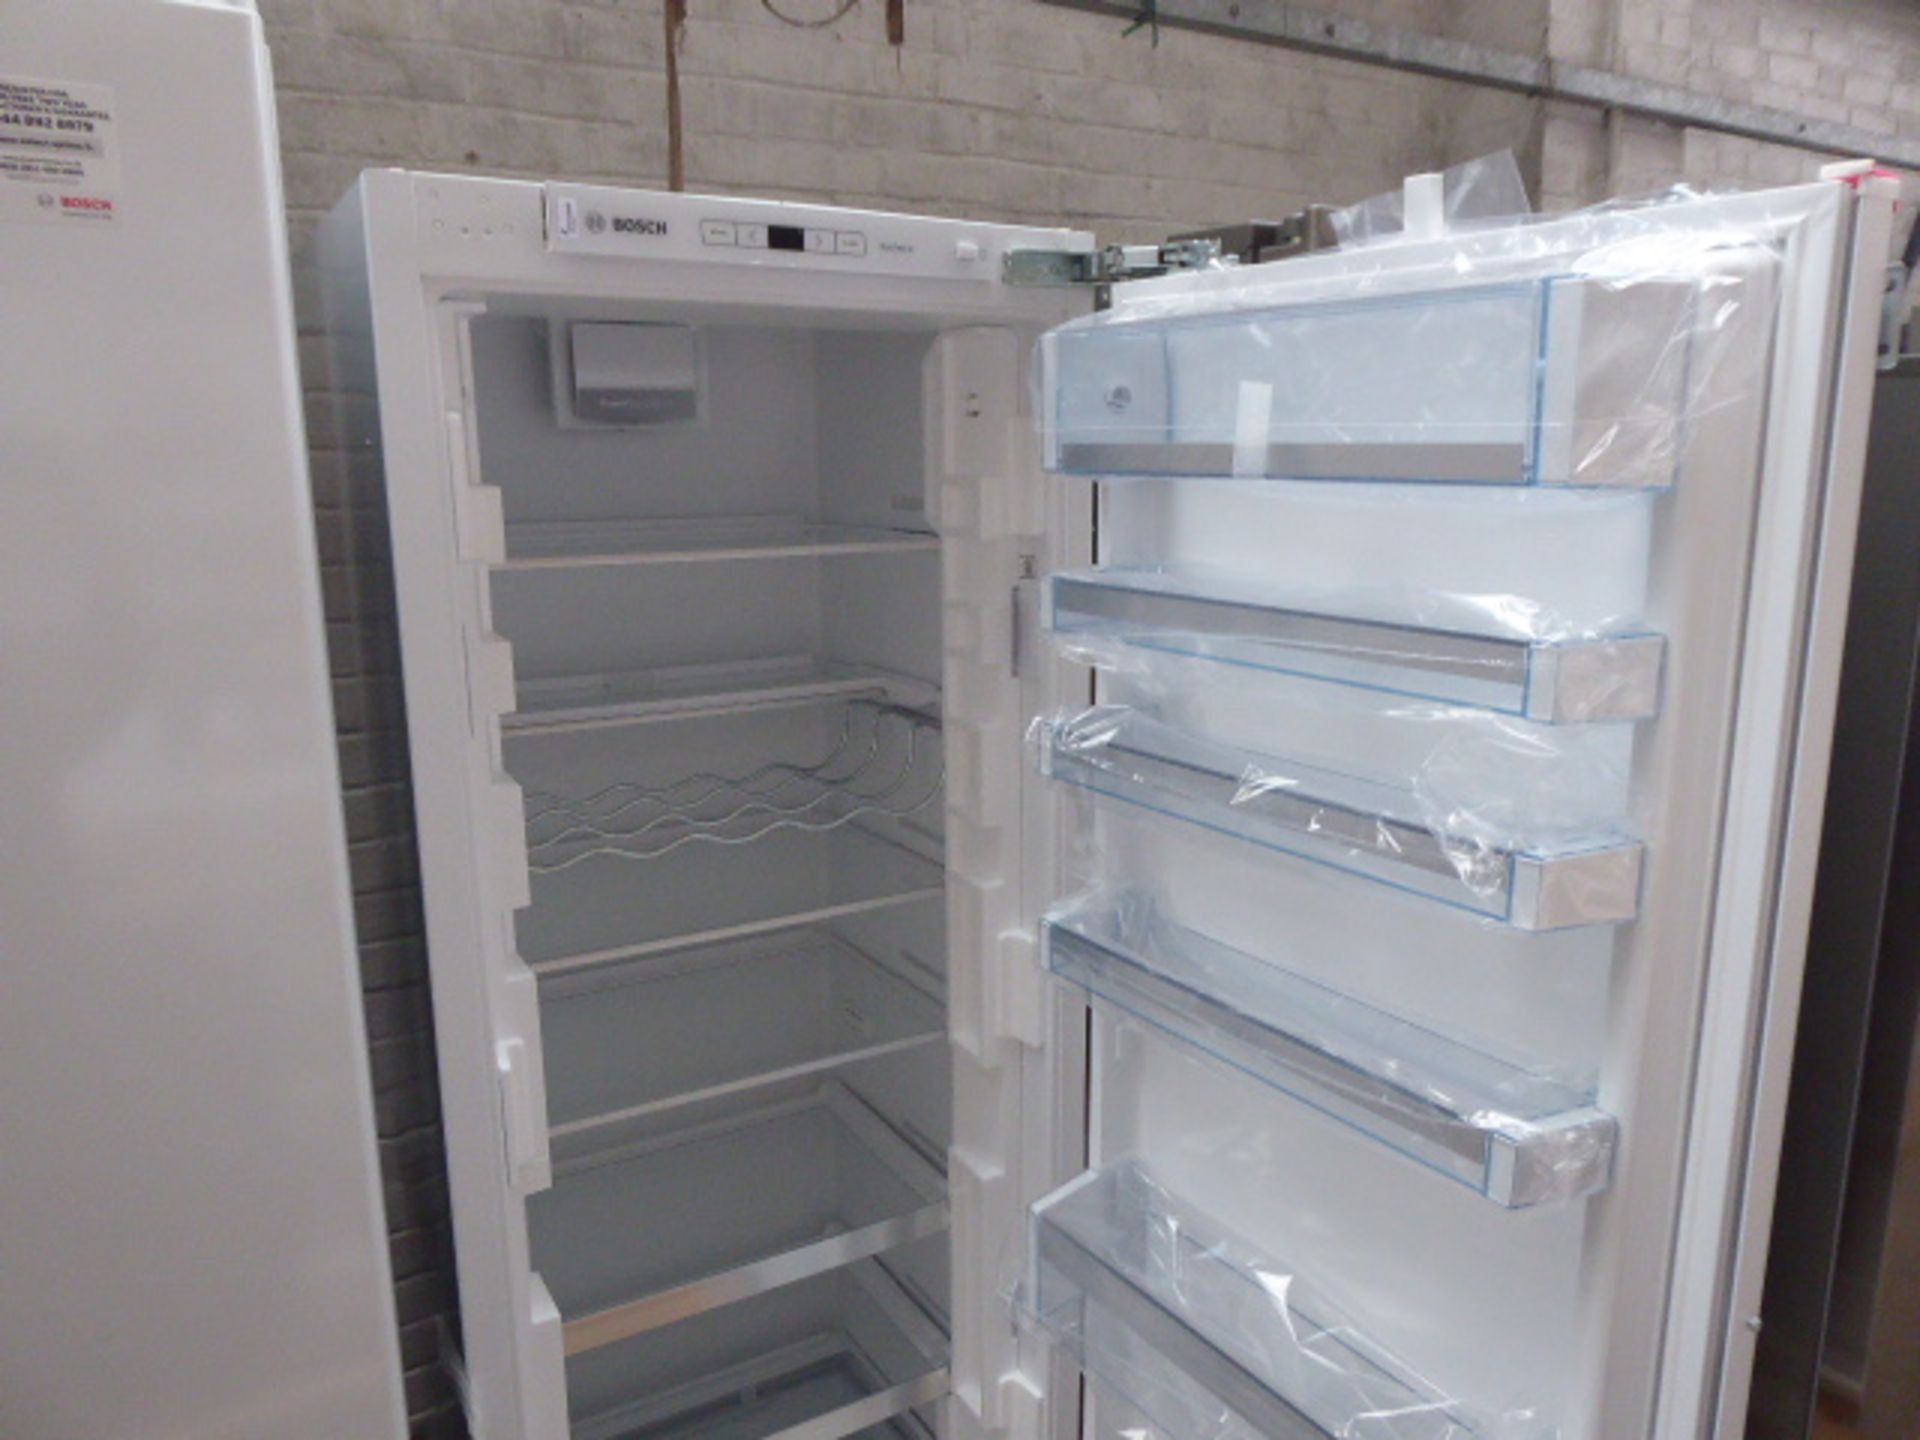 KIR81AFE0GB Bosch Built-in larder fridge - Image 2 of 3